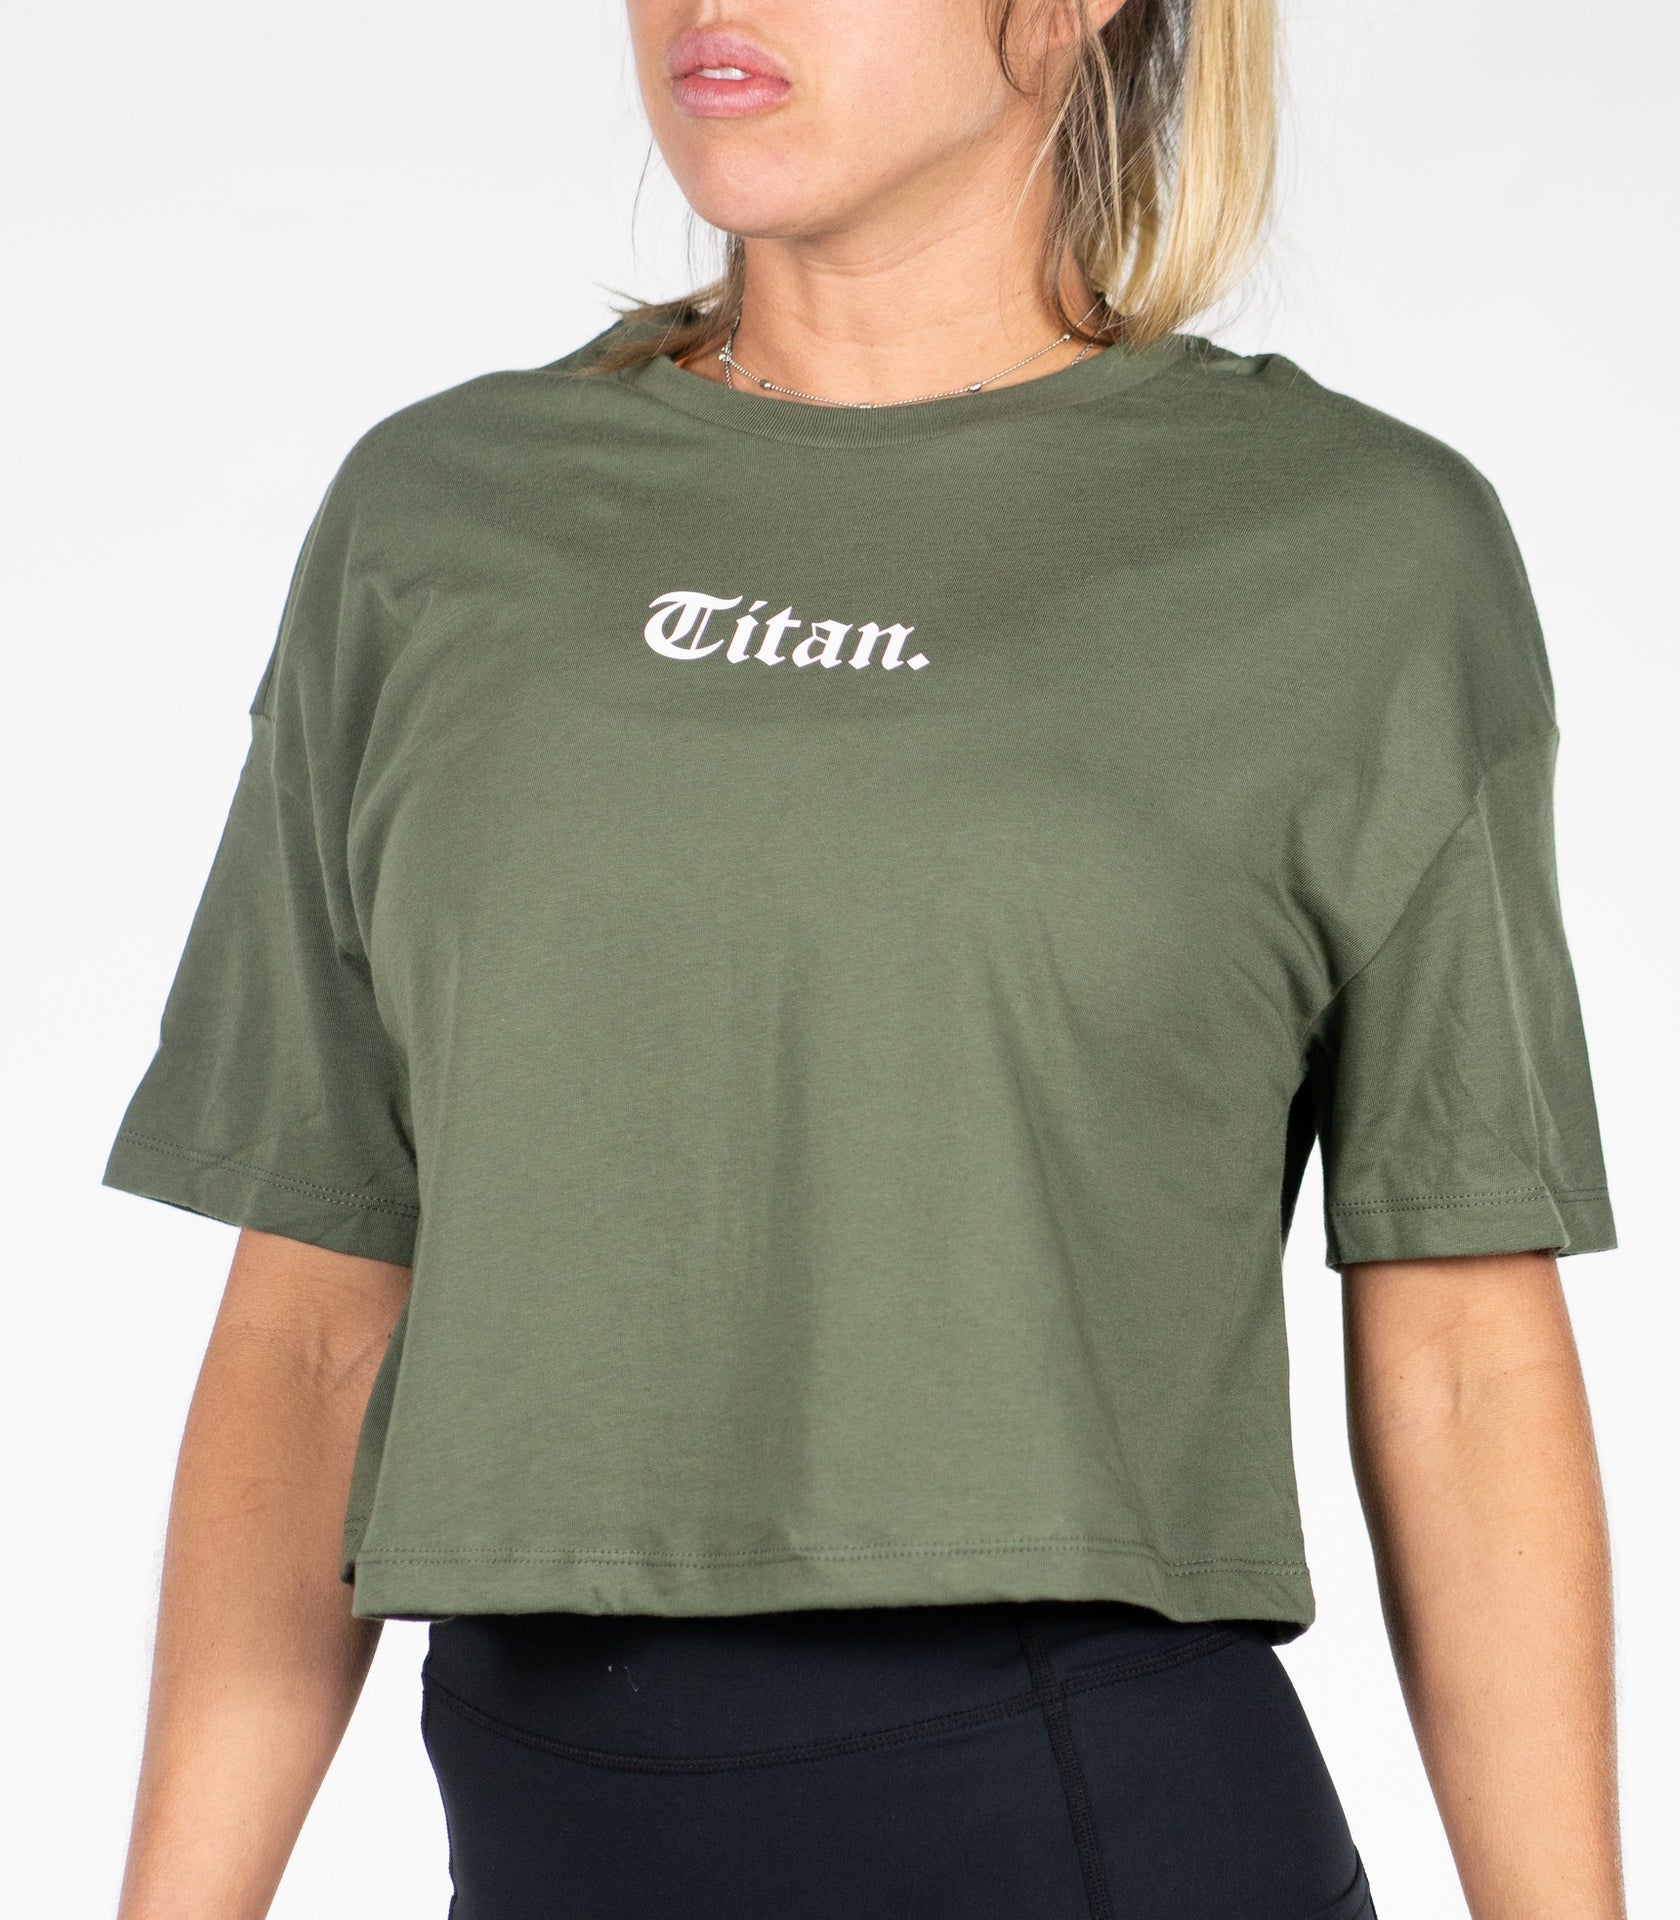 Statement Cropped Tee - Titan